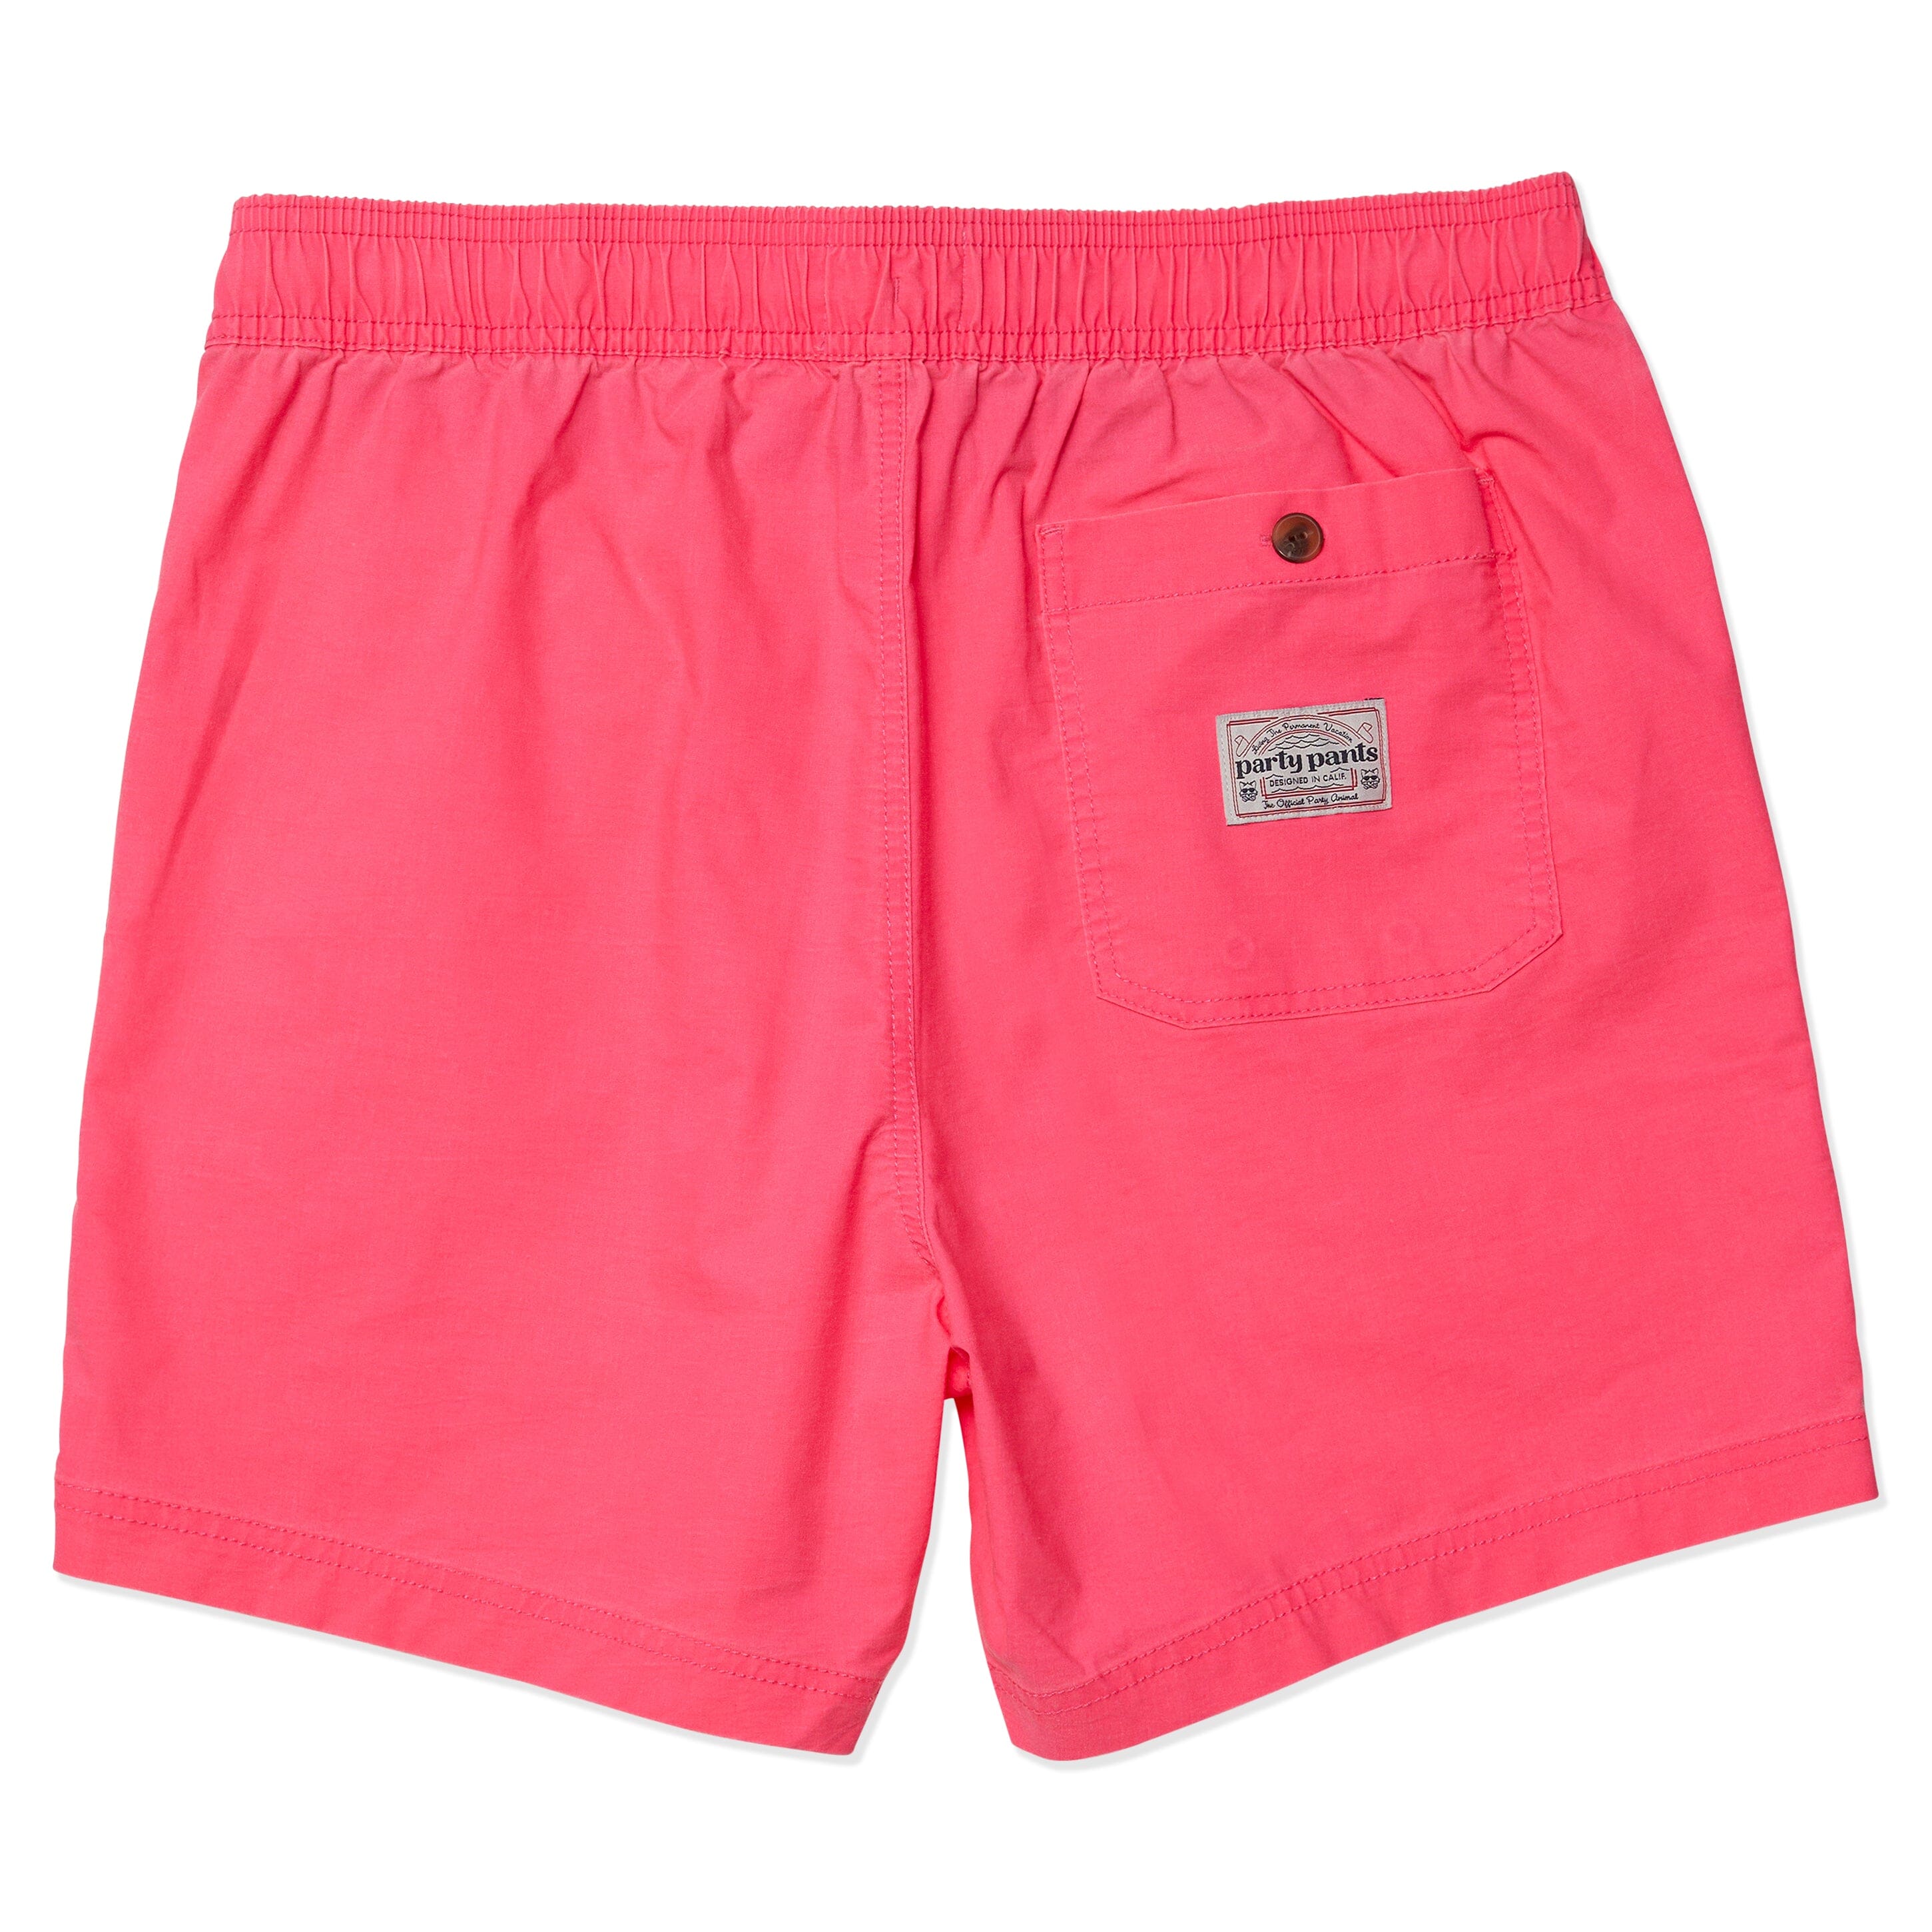 Party Pants USA | Men's Solids Preppy Solid Pink Short